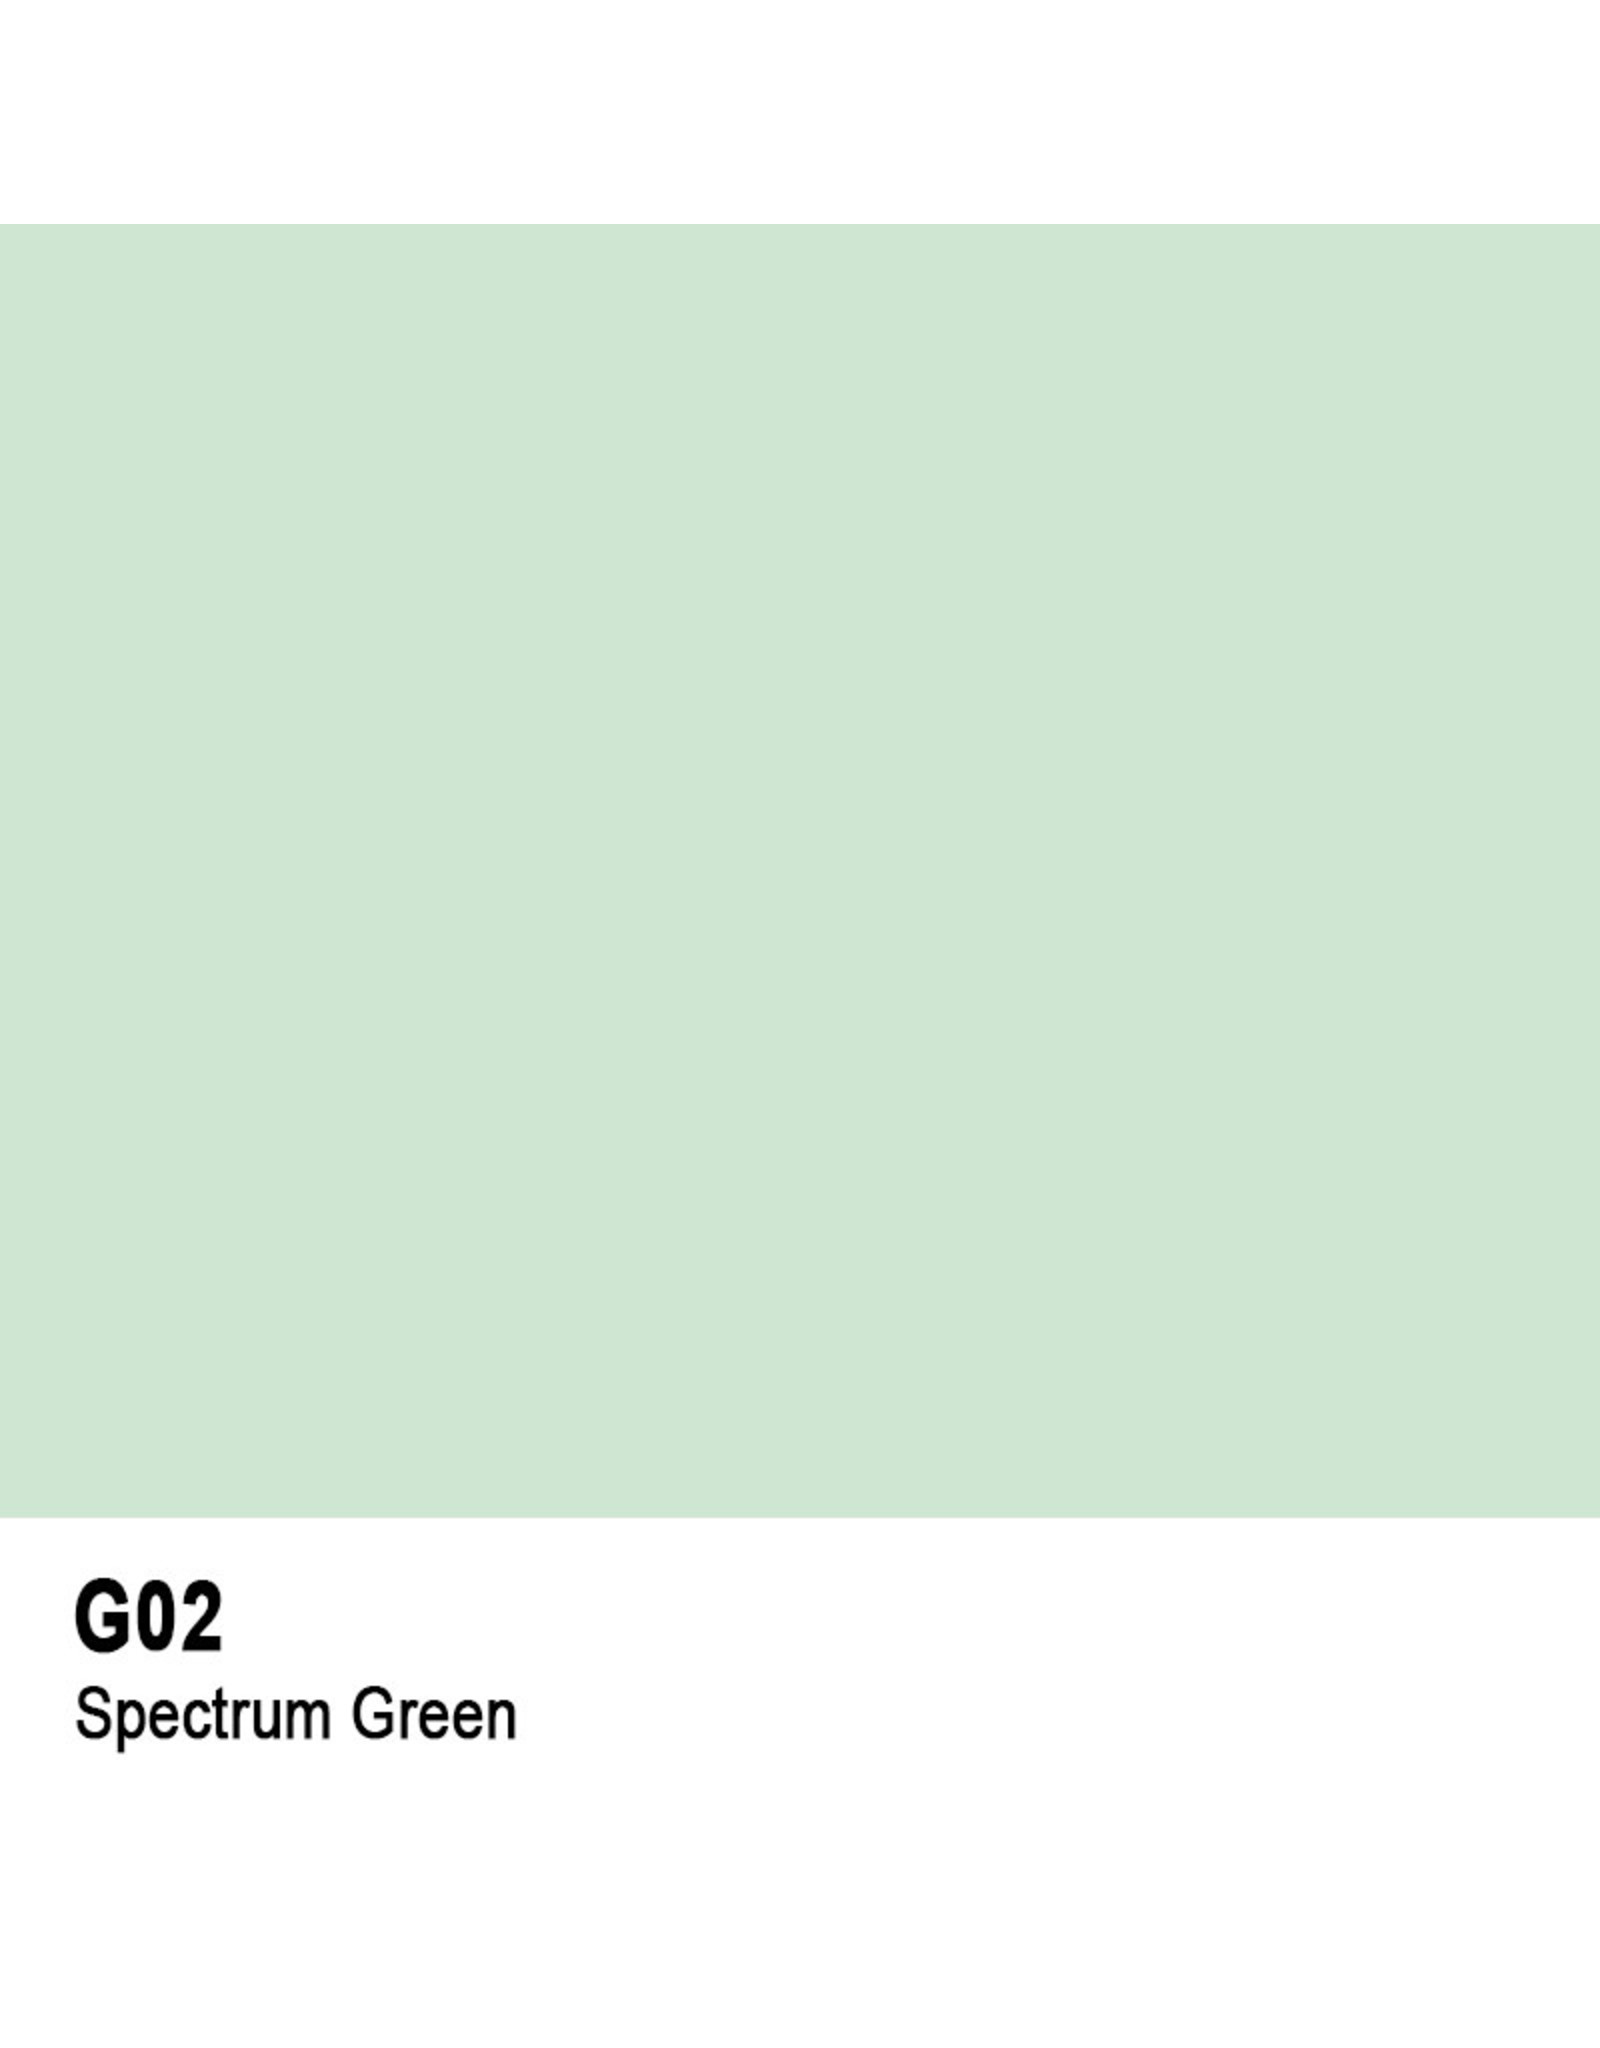 COPIC COPIC G02 SPECTRUM GREEN SKETCH MARKER